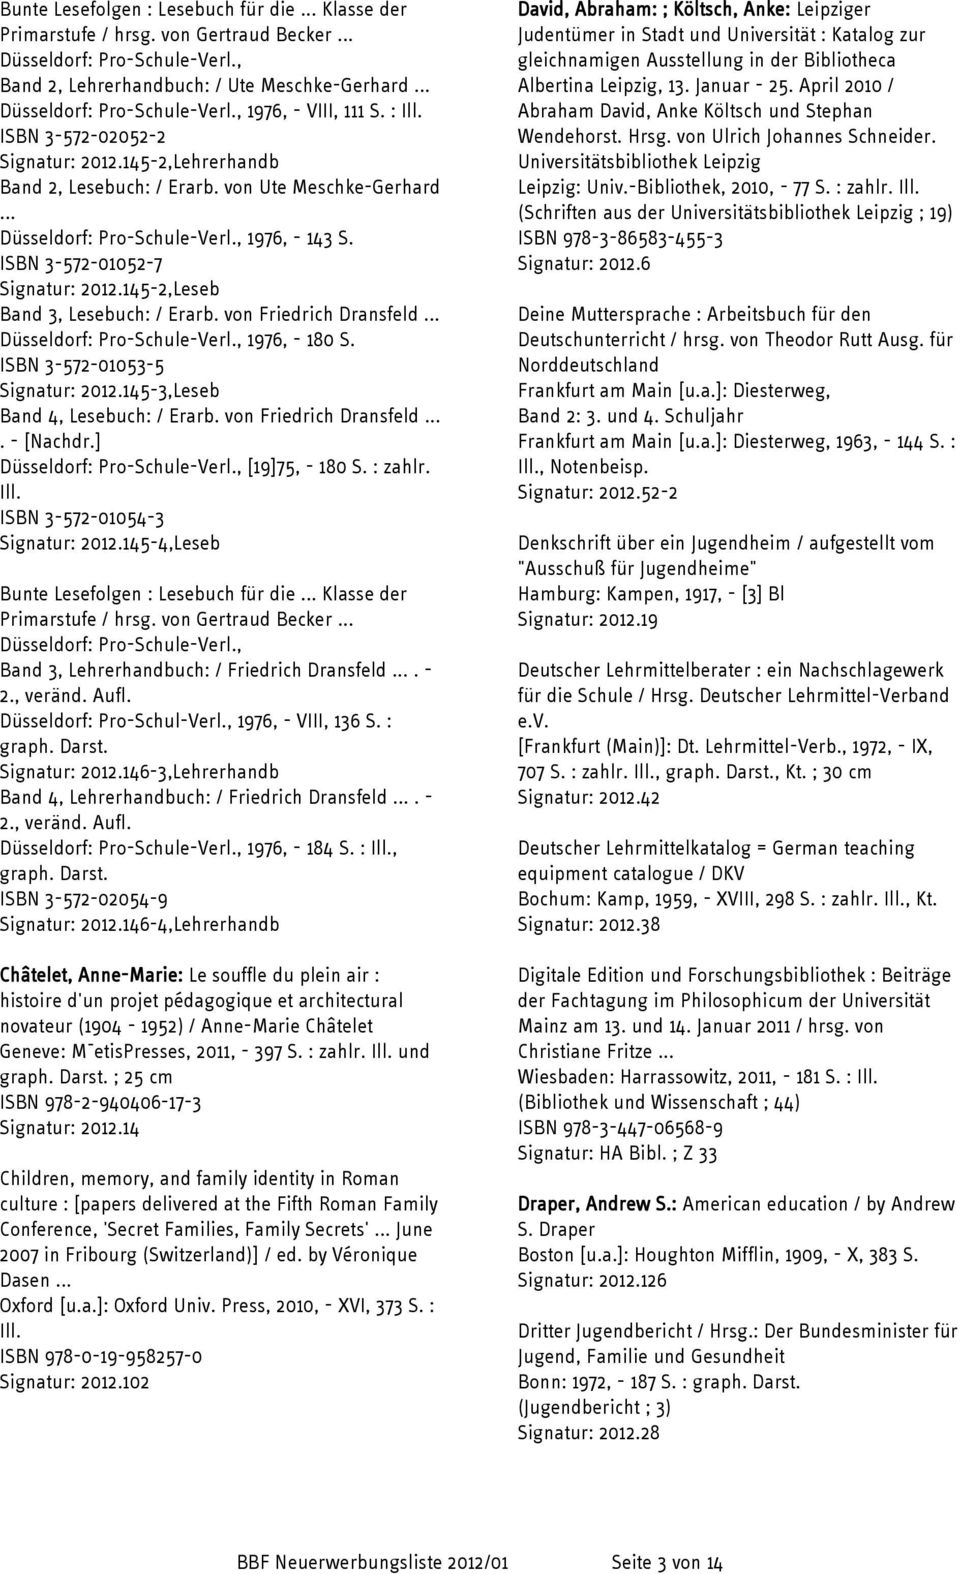 145-2,Leseb Band 3, Lesebuch: / Erarb. von Friedrich Dransfeld... Düsseldorf: Pro-Schule-Verl., 1976, - 180 S. ISBN 3-572-01053-5 Signatur: 2012.145-3,Leseb Band 4, Lesebuch: / Erarb.